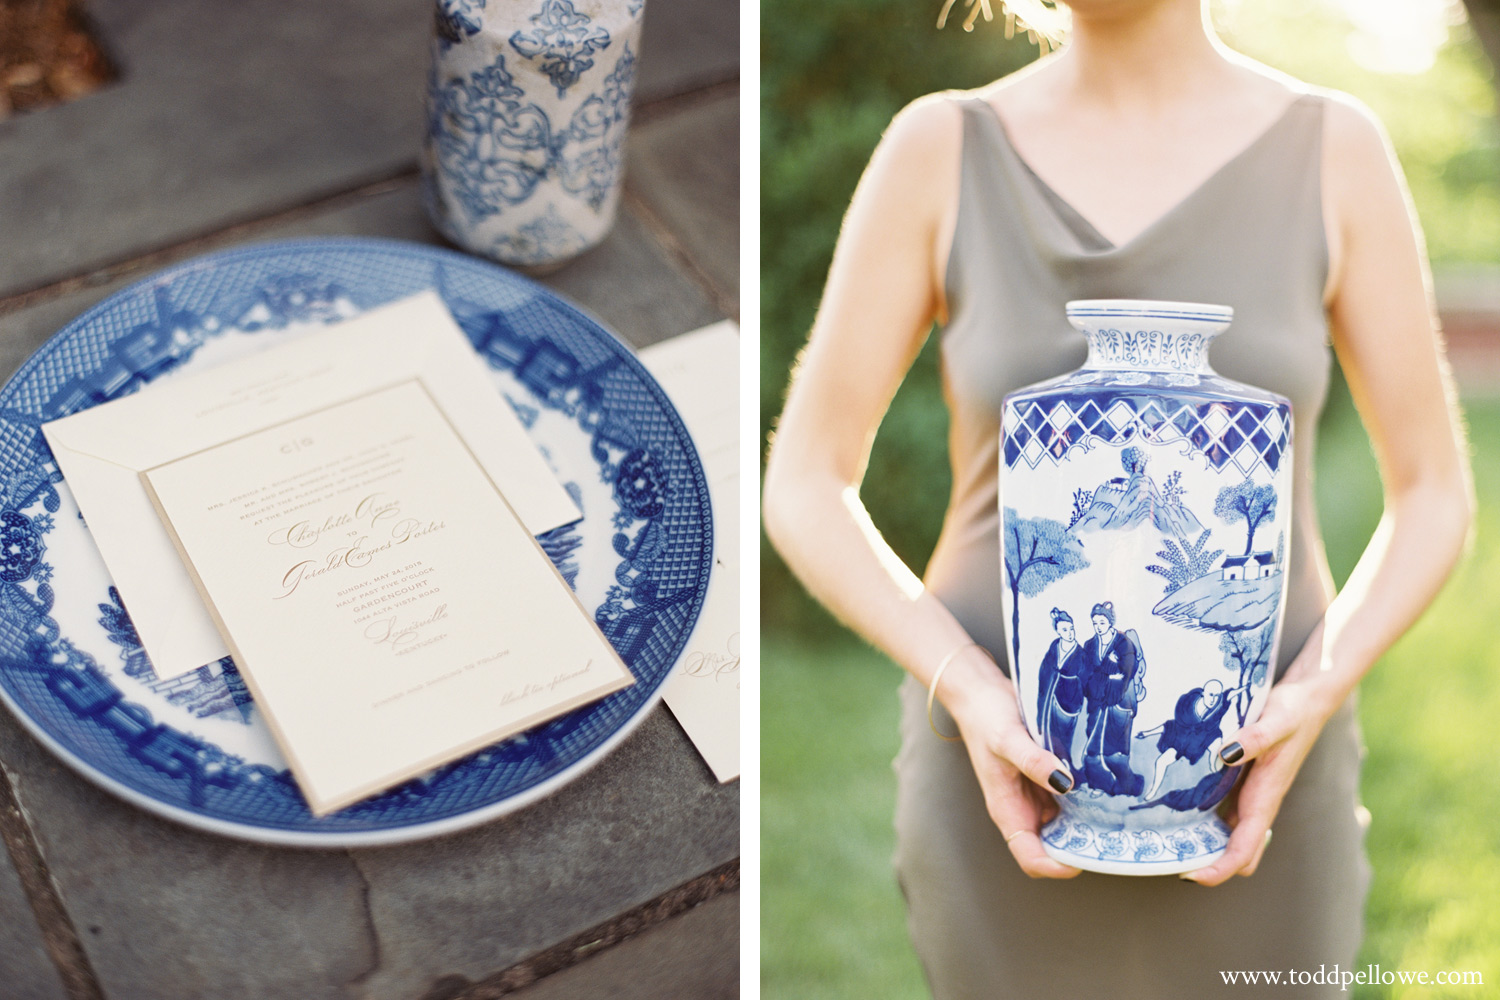 Delftware Pottery at wedding